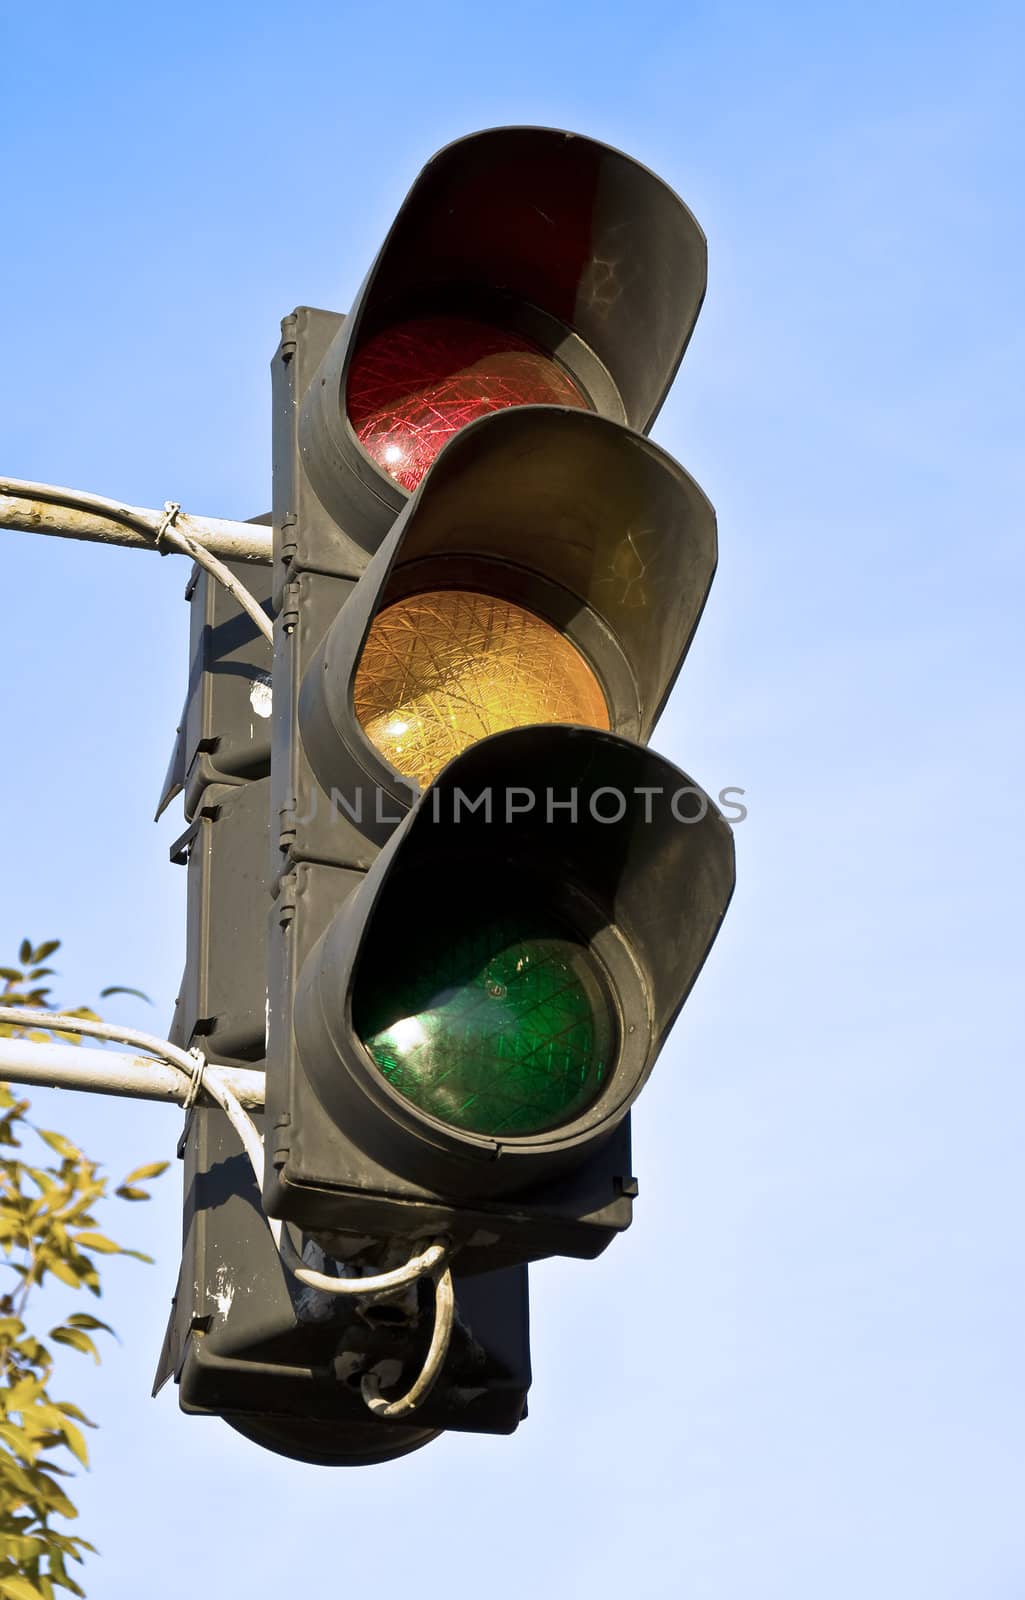 Old traffic light against the blue sky.